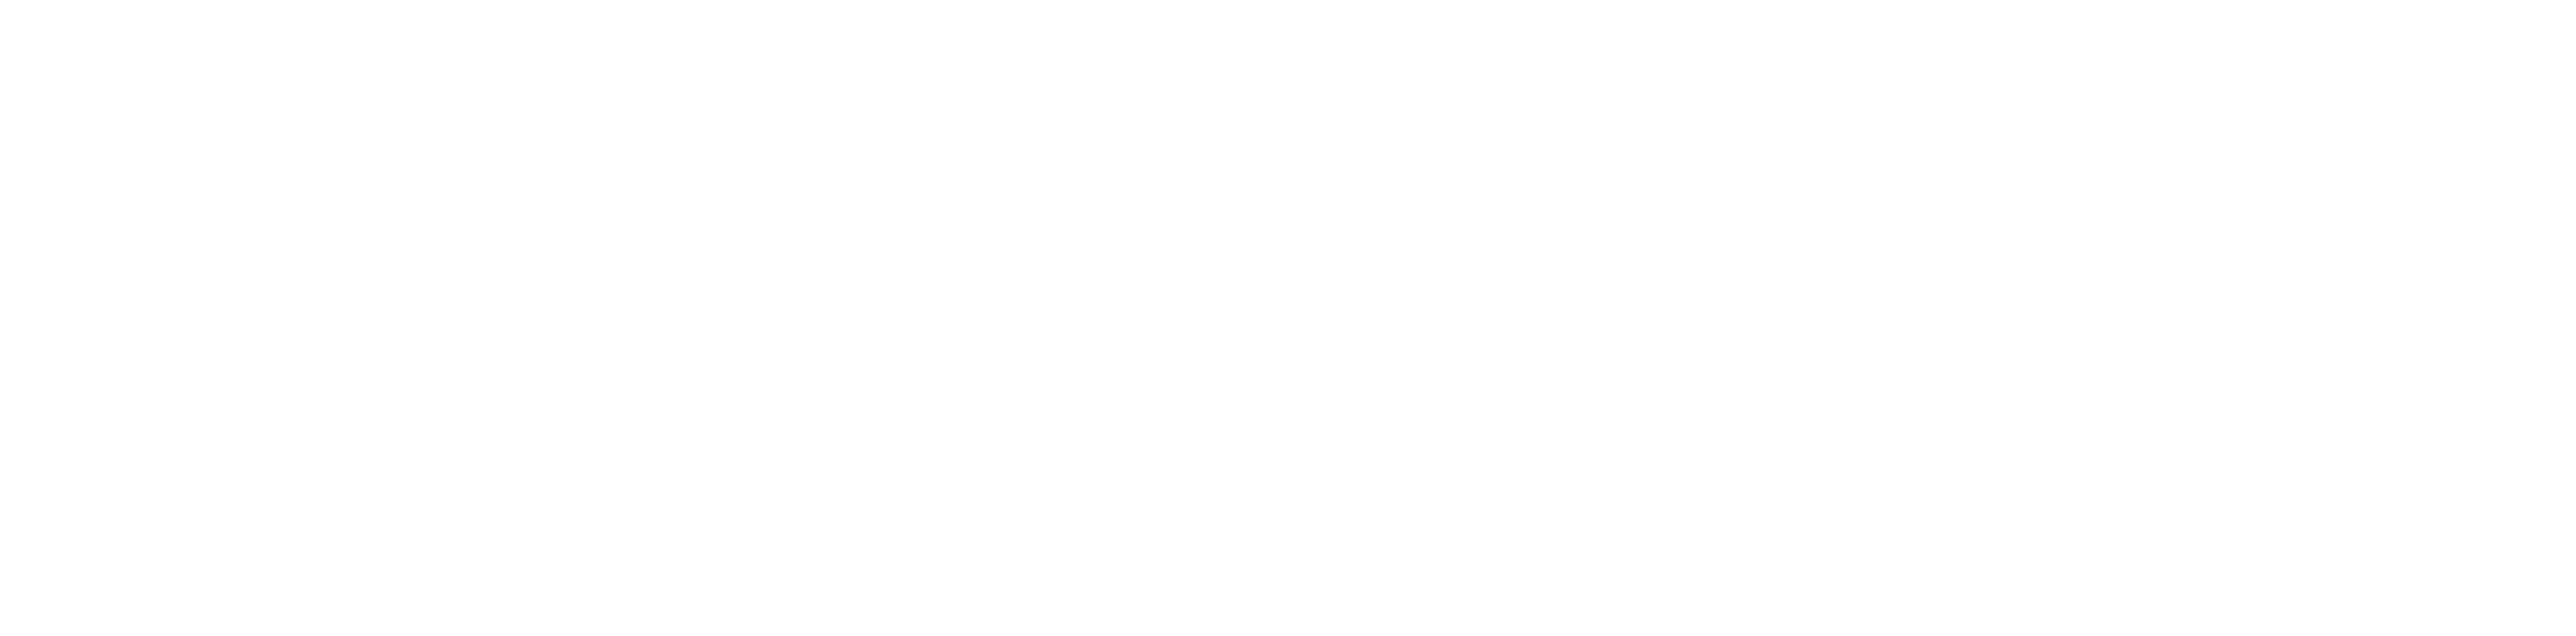 Masada Healthcare